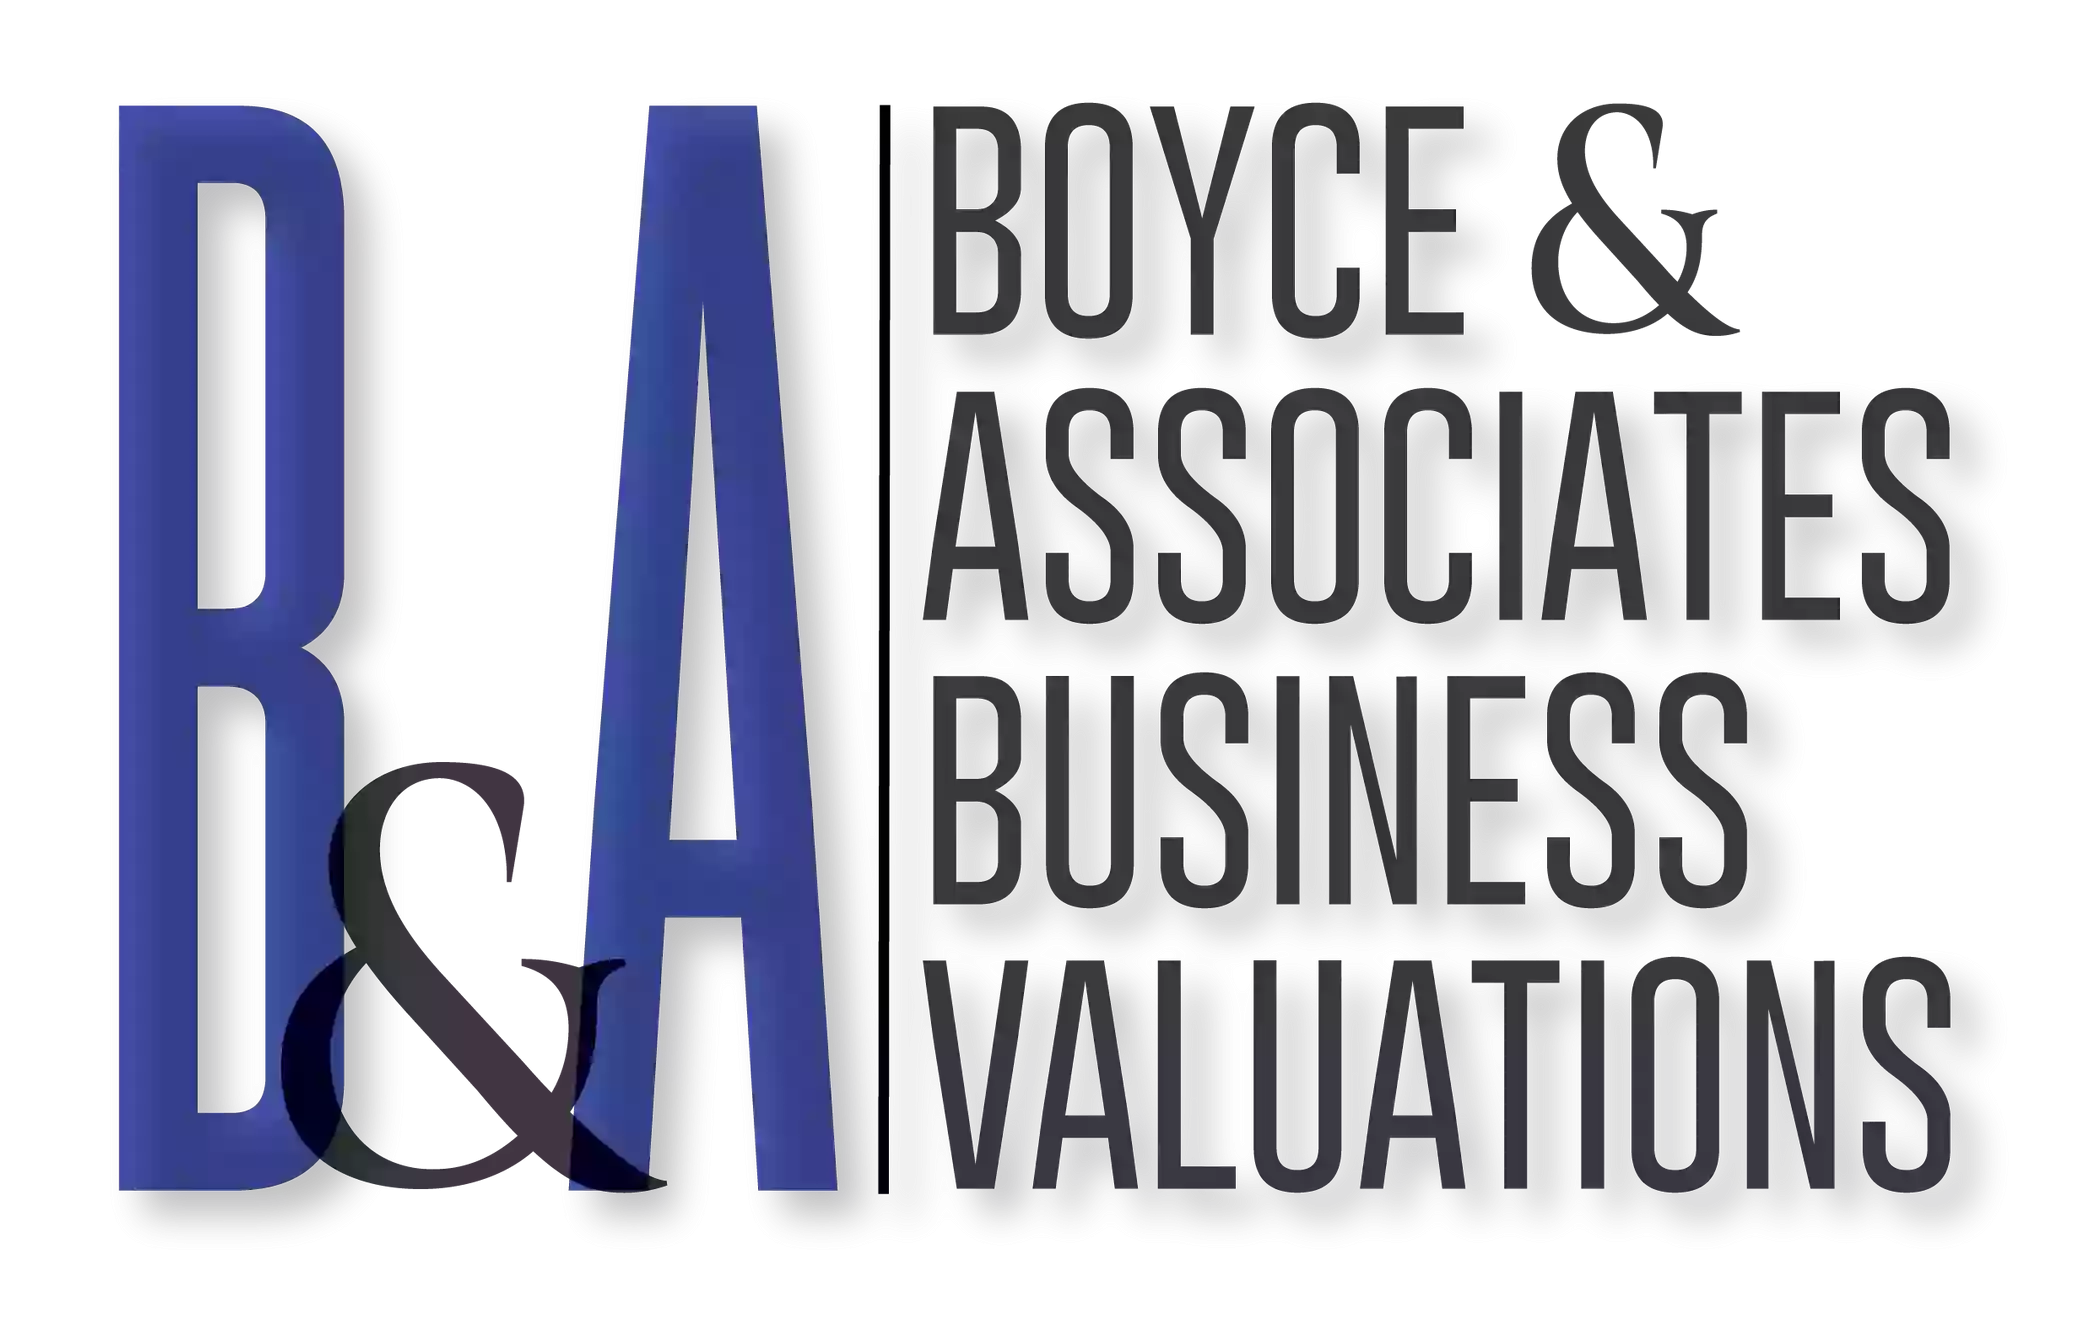 Boyce & Associates Business Valuations